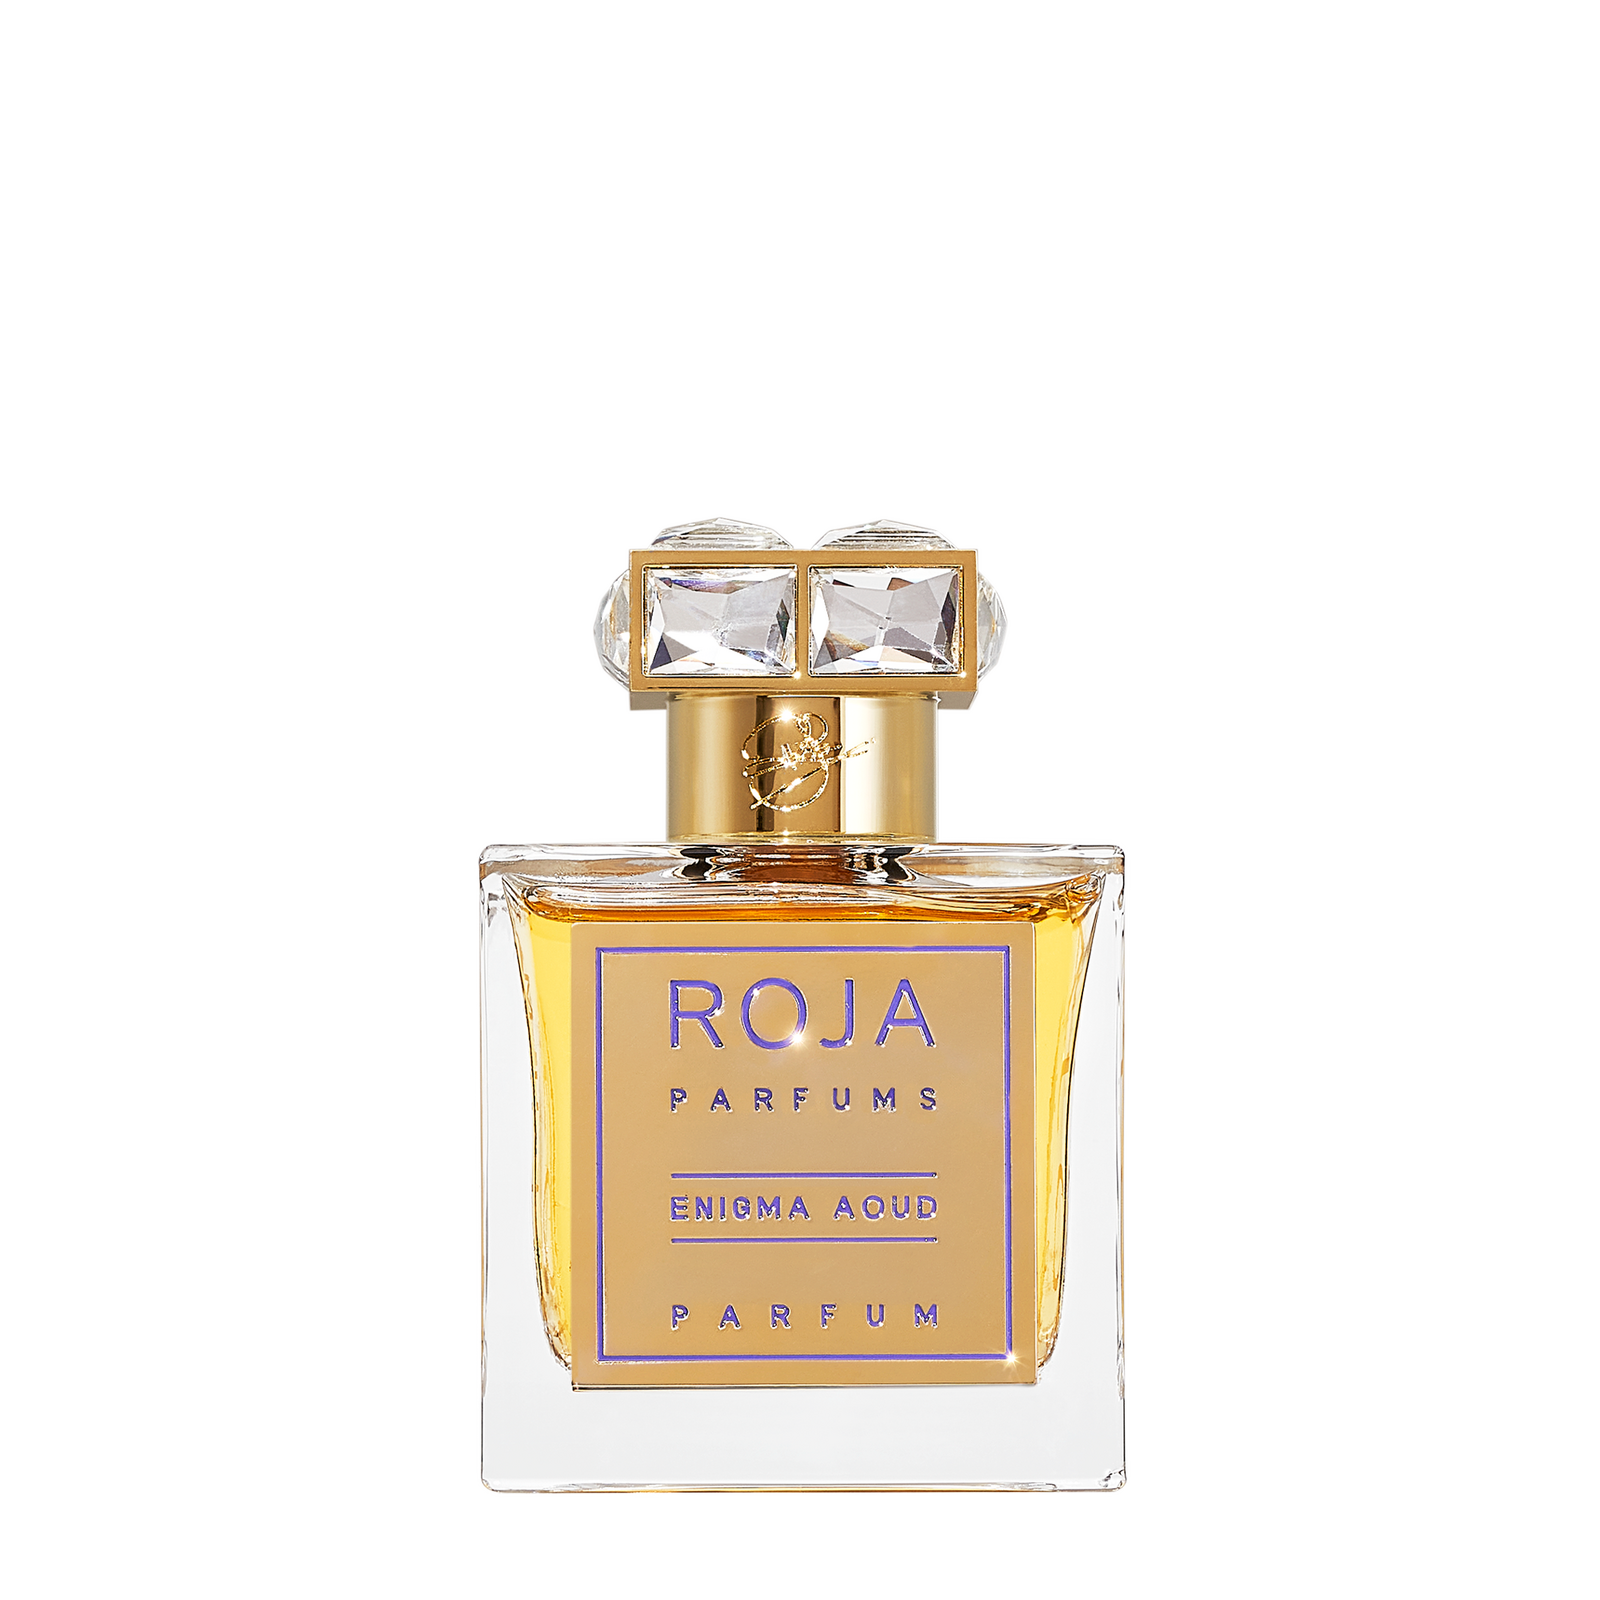 Roja Enigma Aoud Parfum 100ml | City Perfume